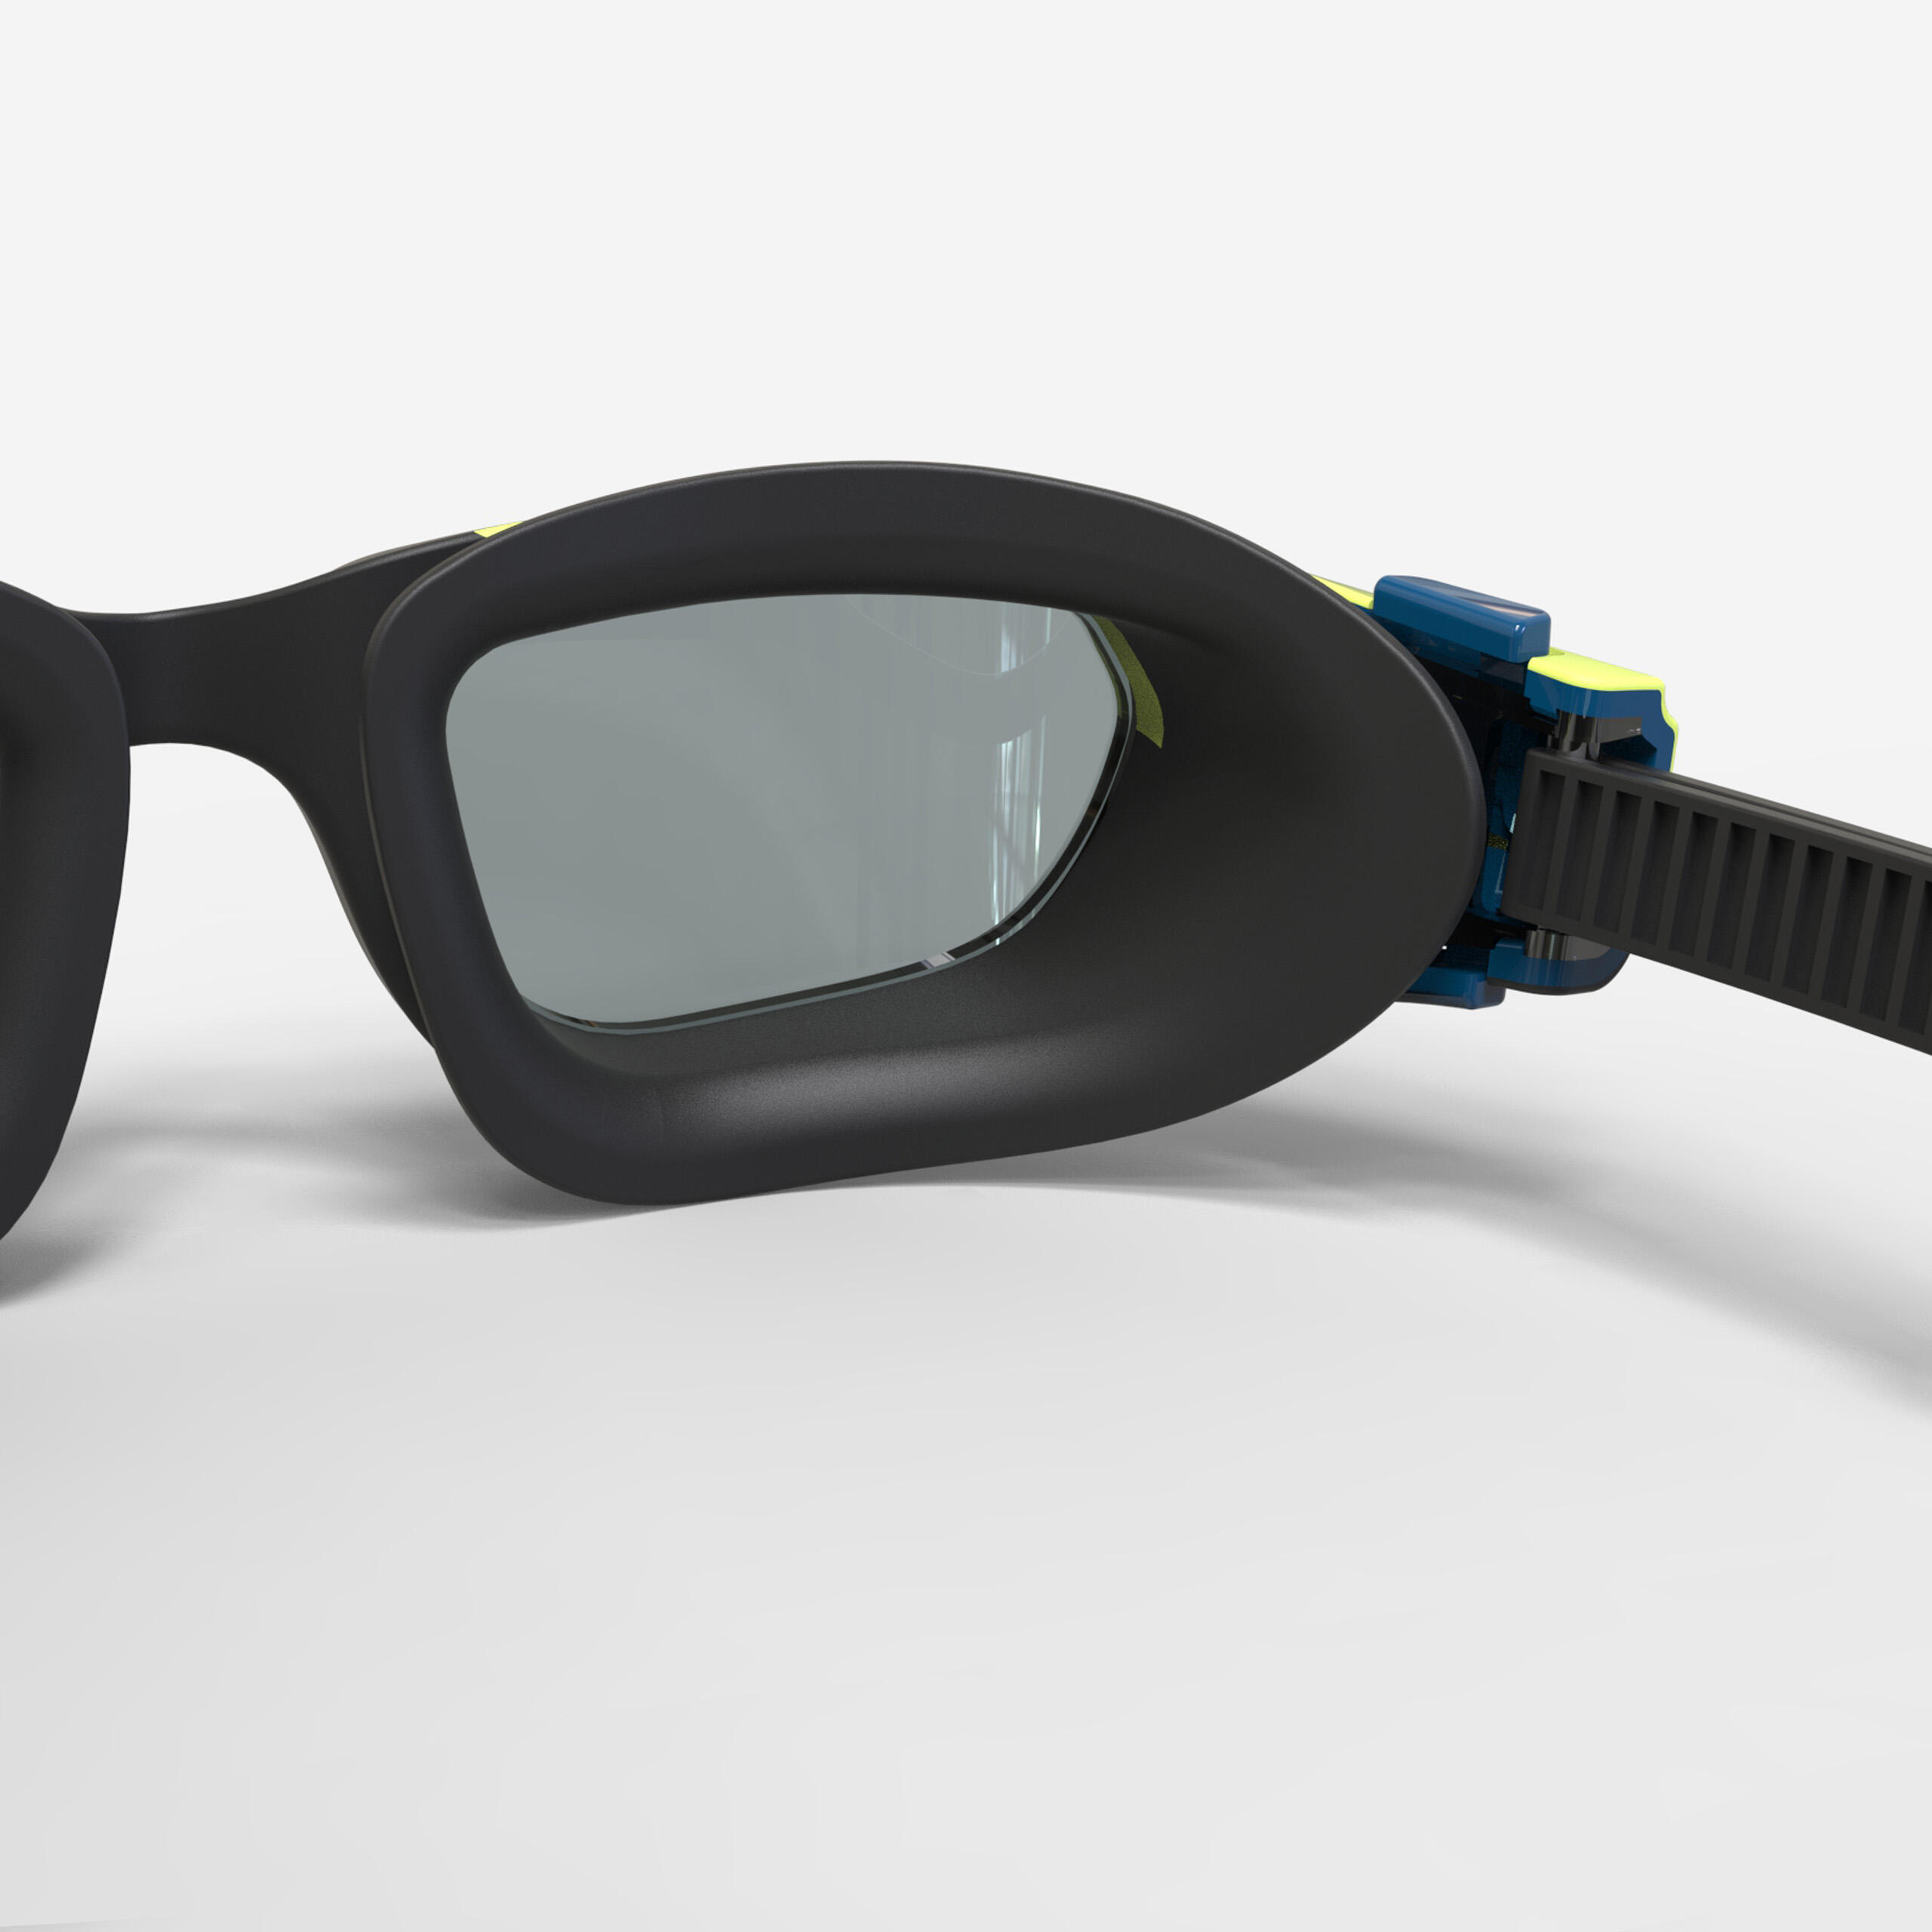 Swimming goggles SPIRIT - Smoked lenses - Size small - Black yellow 5/5